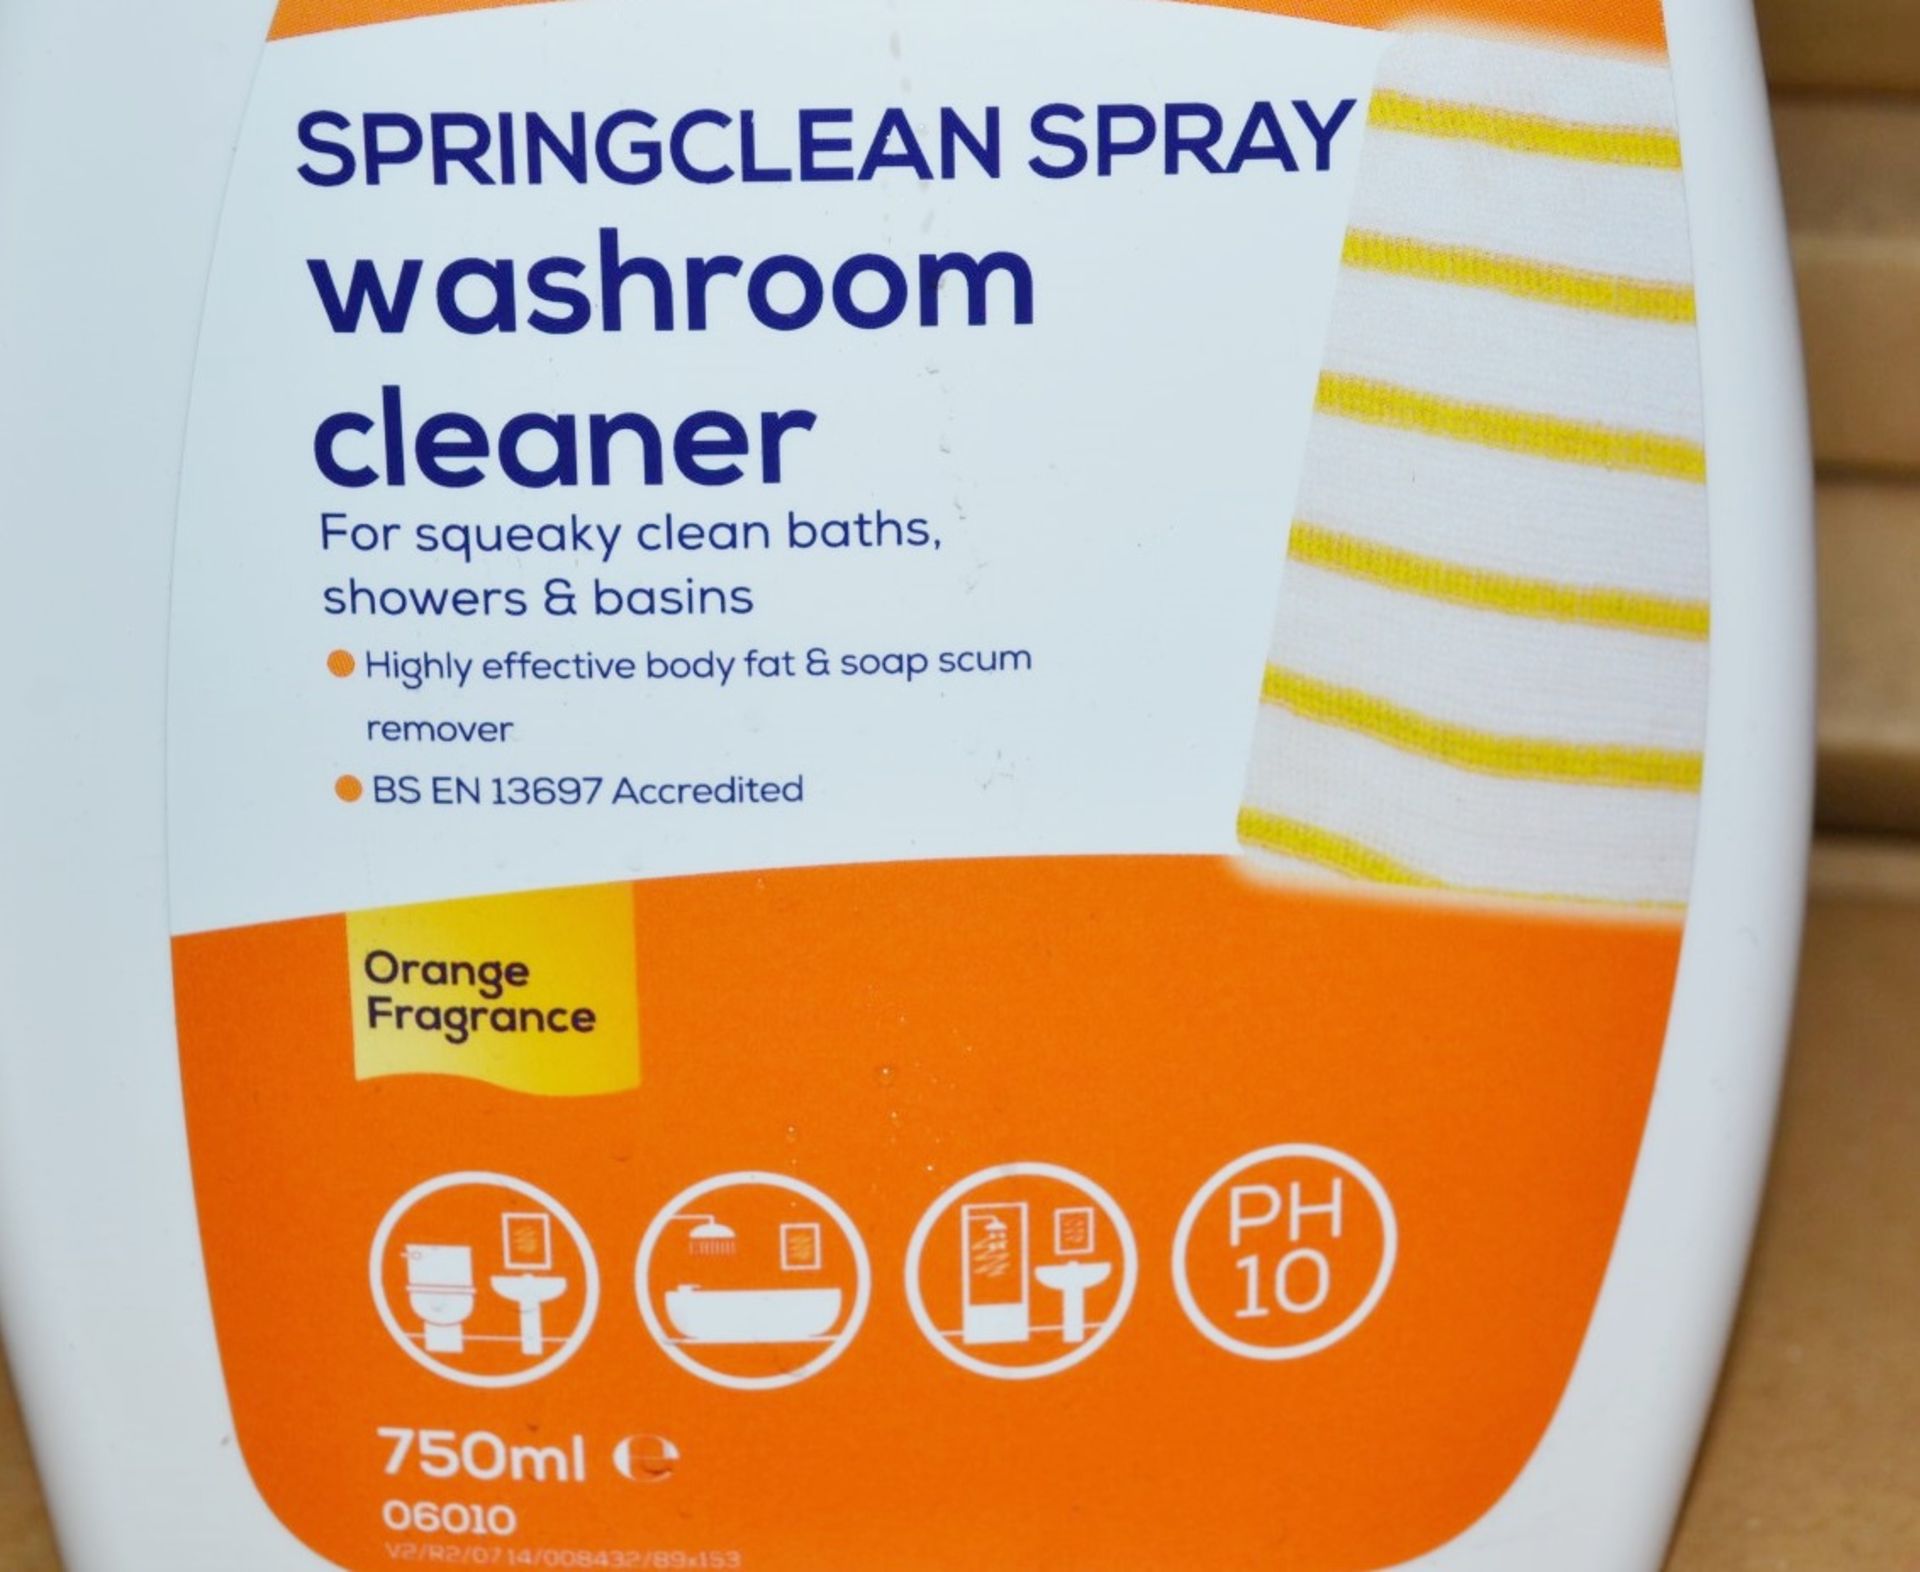 6 x 750ml Bottles Of Premiere "Springclean Spray" Commercial Washroom Cleaner - Orange Fragrance - - Image 6 of 7